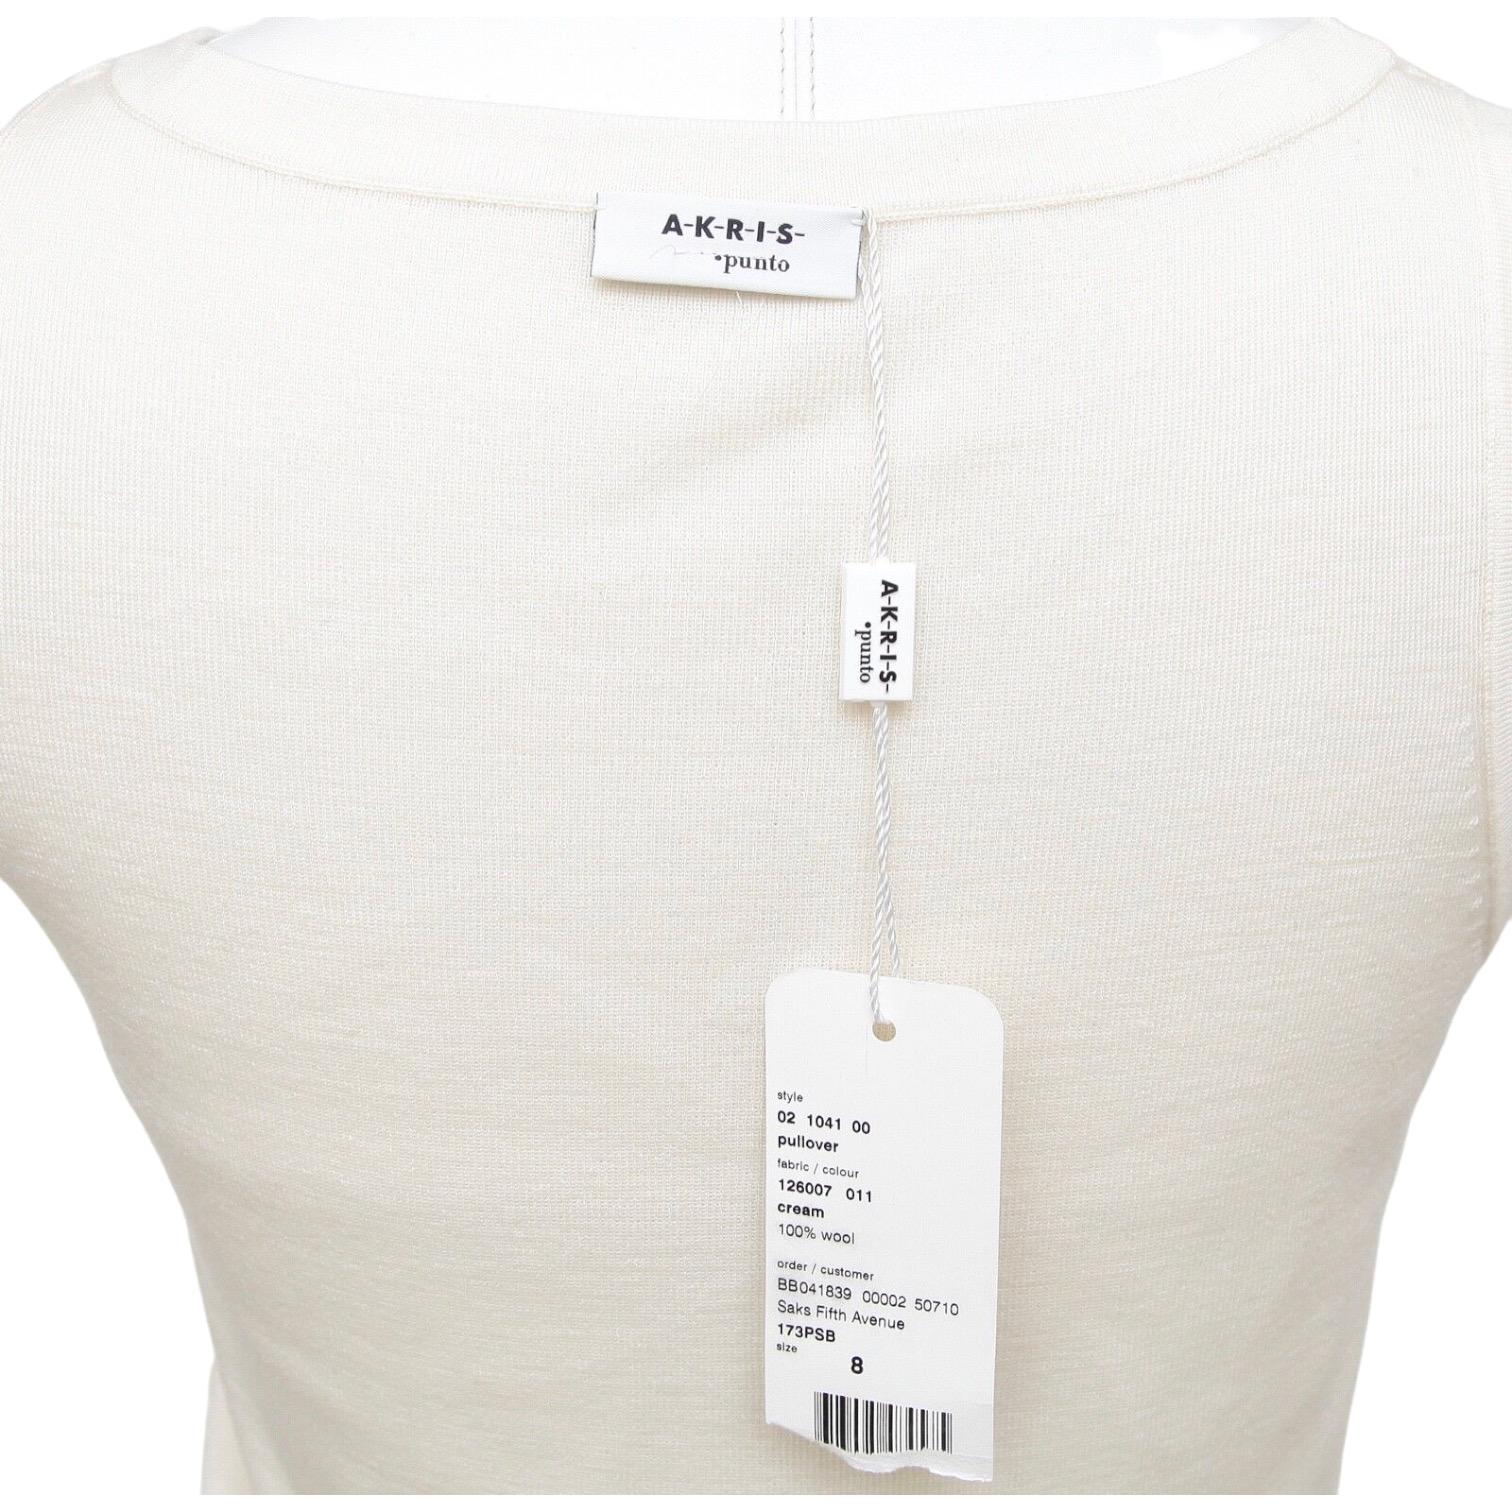 AKRIS PUNTO Sleeveless Top Sweater Knit Shirt Shell Wool Cream Sz 8 40 BNWT For Sale 3